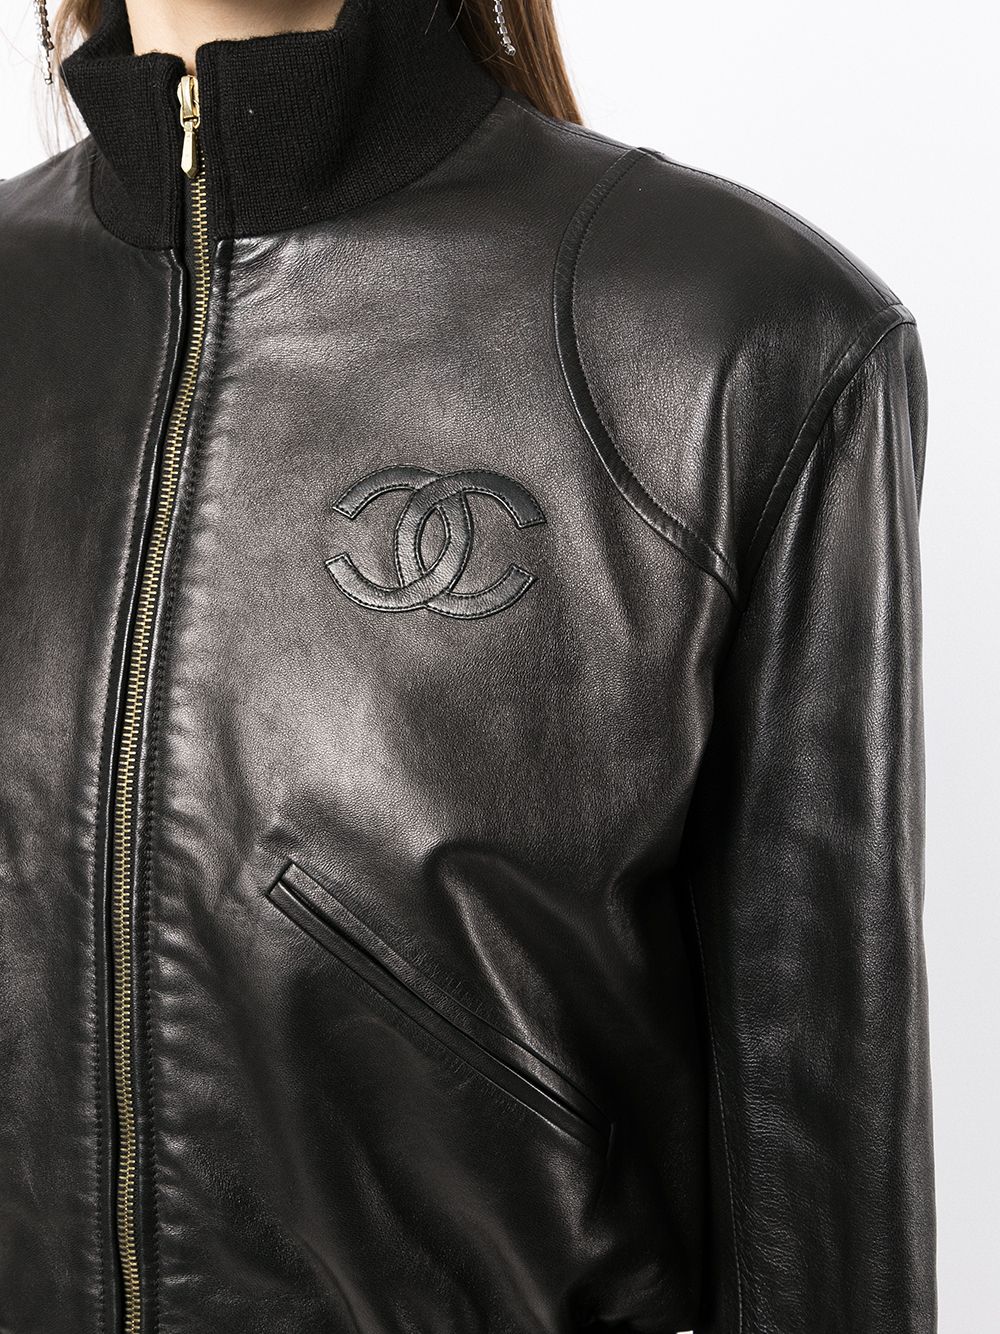 CHANEL Pre-Owned CC Logos Sleeveless Denim Jacket - Farfetch